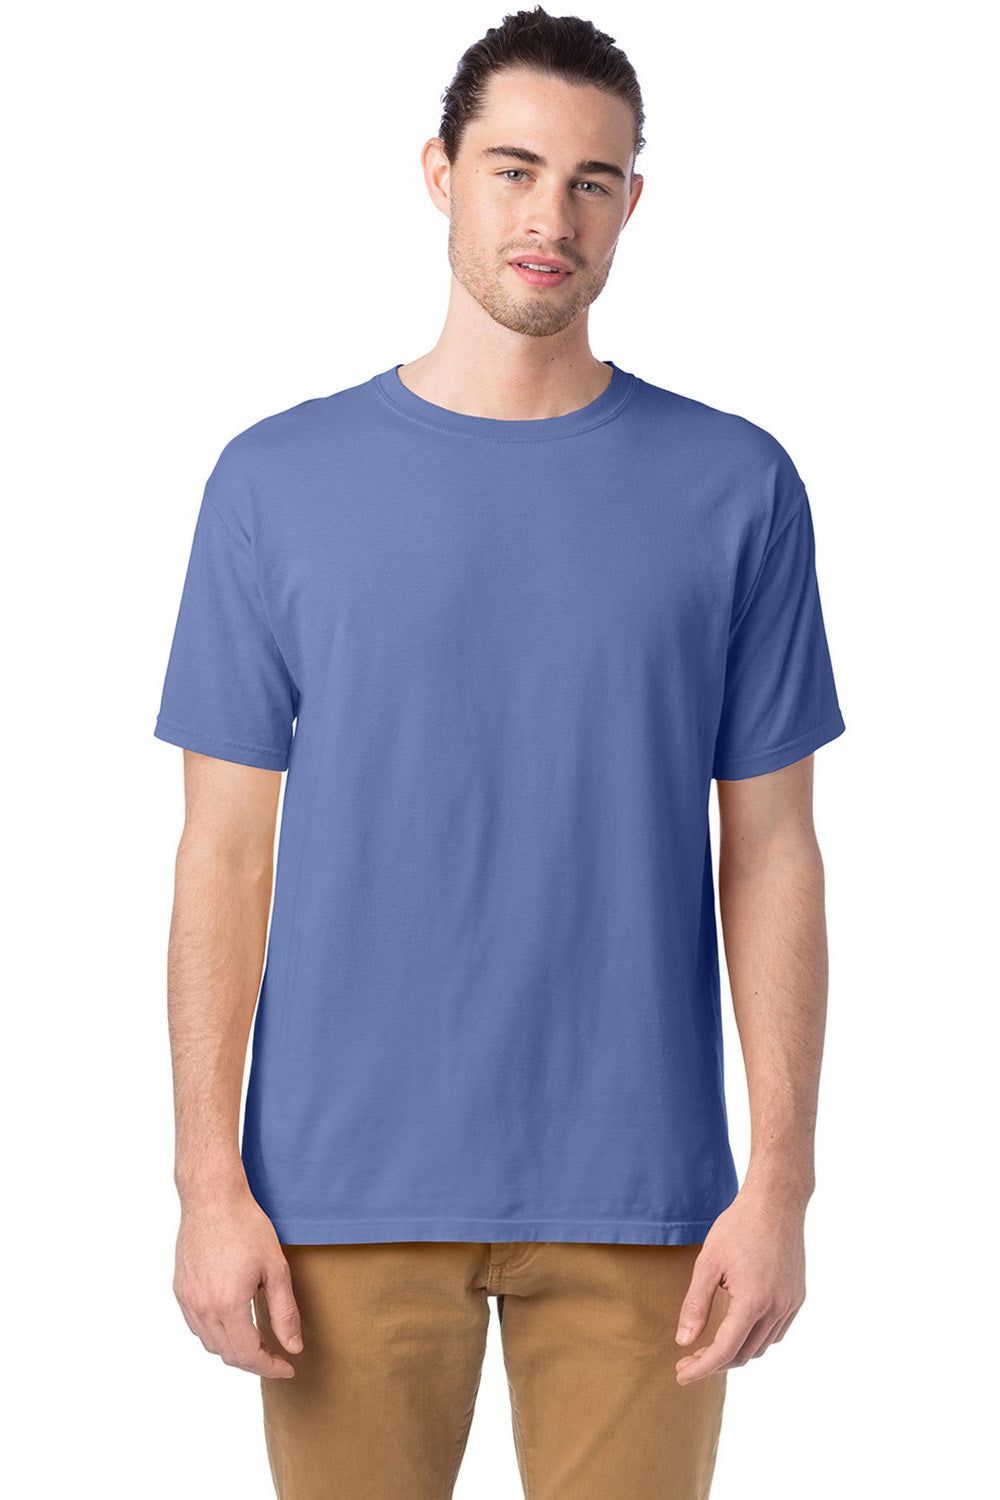 ComfortWash by Hanes GDH100 Mens Short Sleeve Crewneck T-Shirt Frontier Blue Front